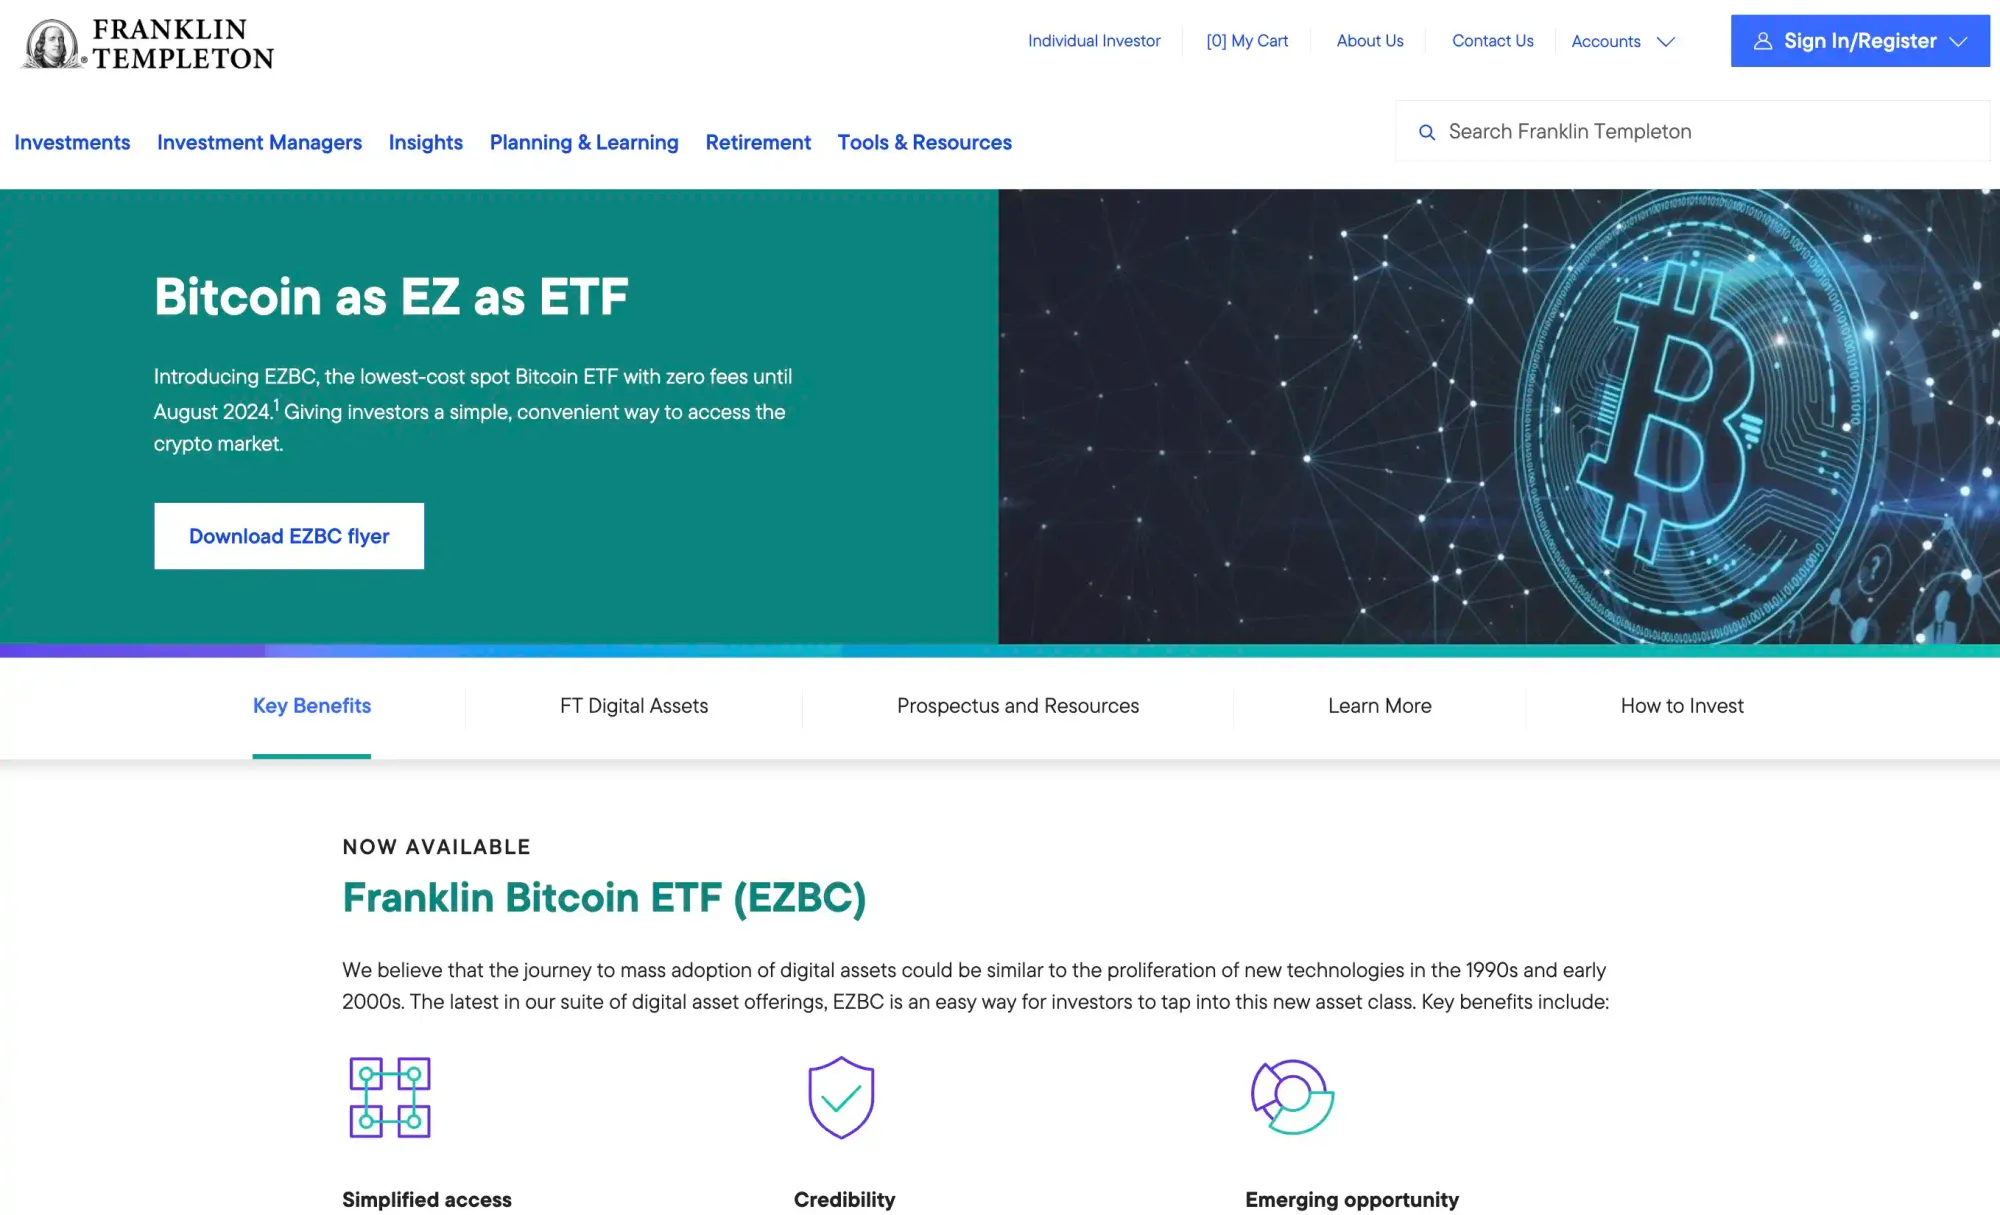 Franklin Templeton Franklin Bitcoin ETF (EZBC)